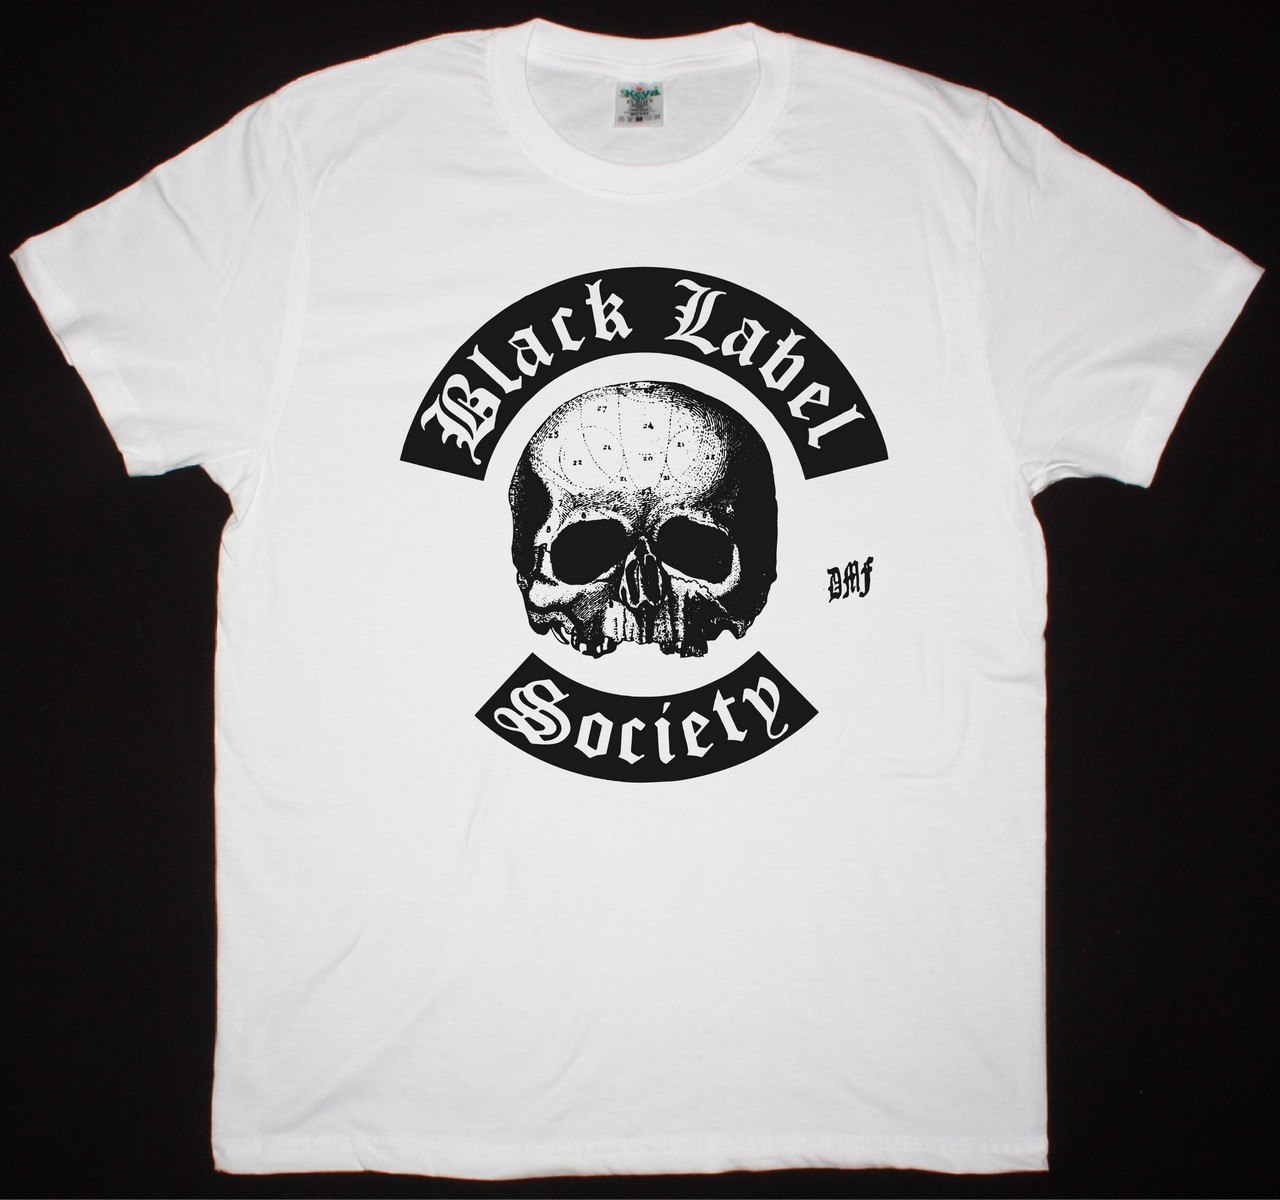 BLACK LABEL SOCIETY LOGO NEW WHITE T-SHIRT - Best Rock T-shirts